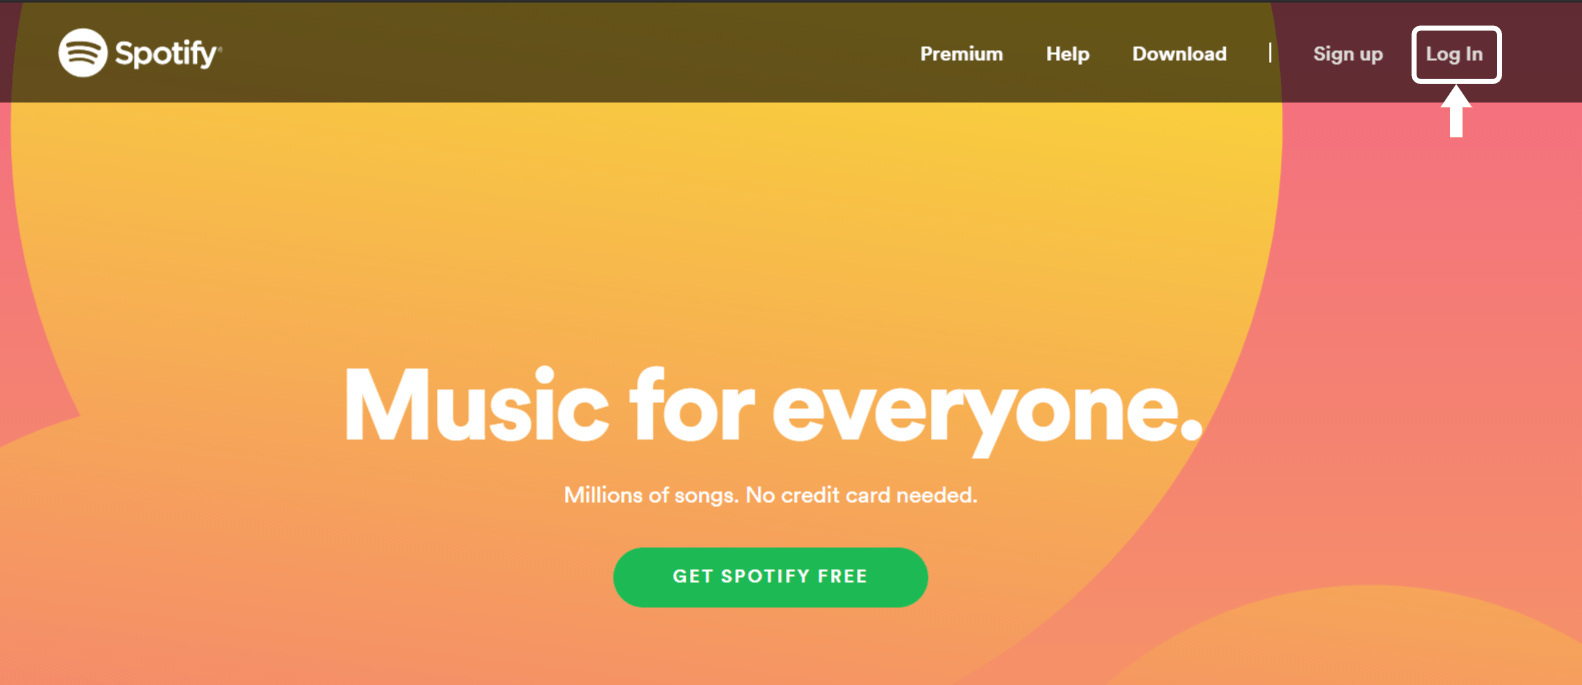 Spotify homepage.